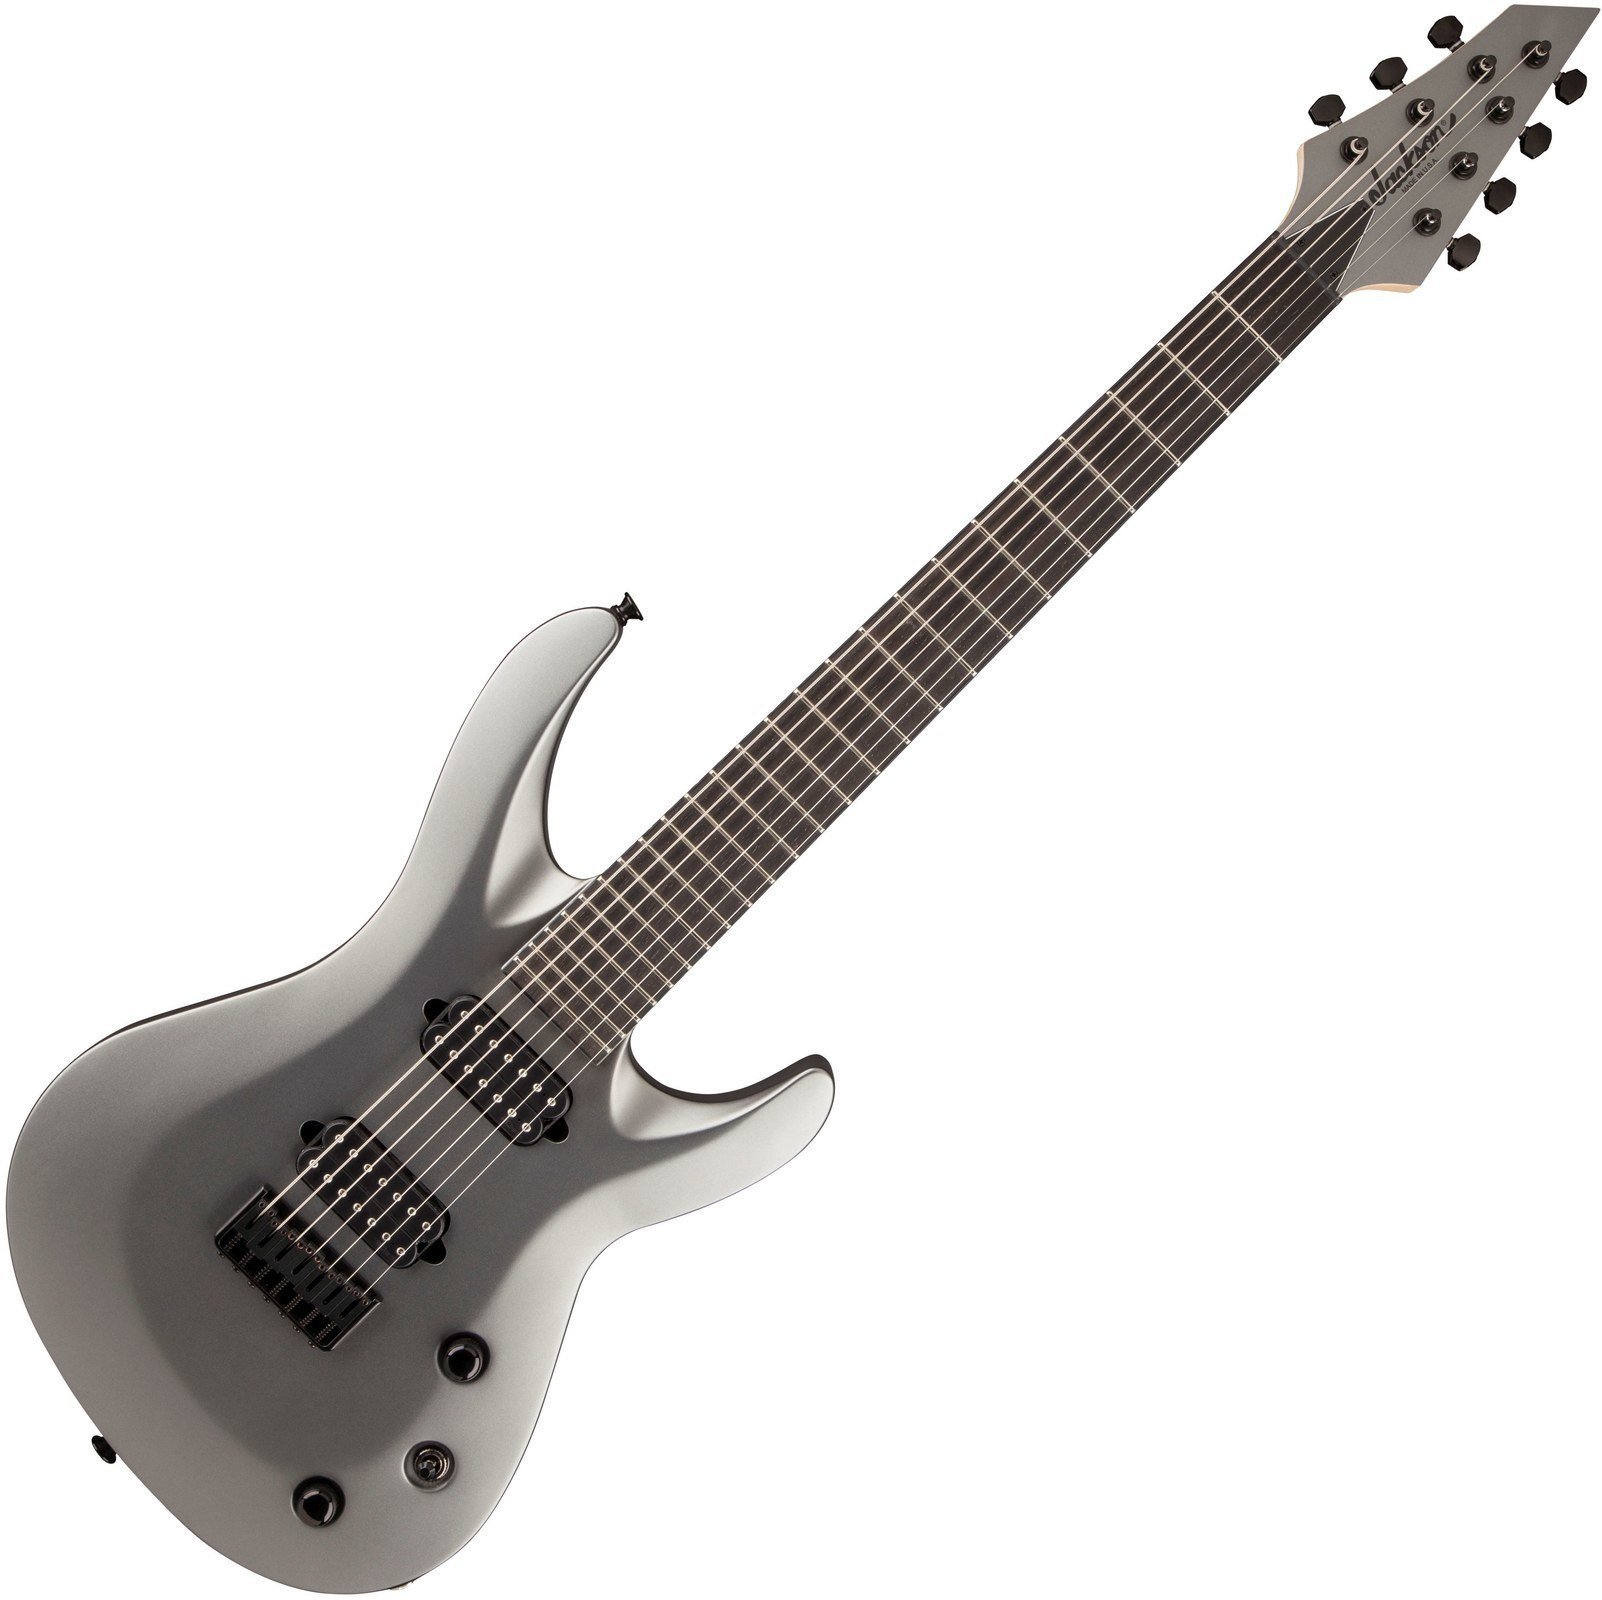 7-string Electric Guitar Jackson USA Select B7 Satin Gray with Case